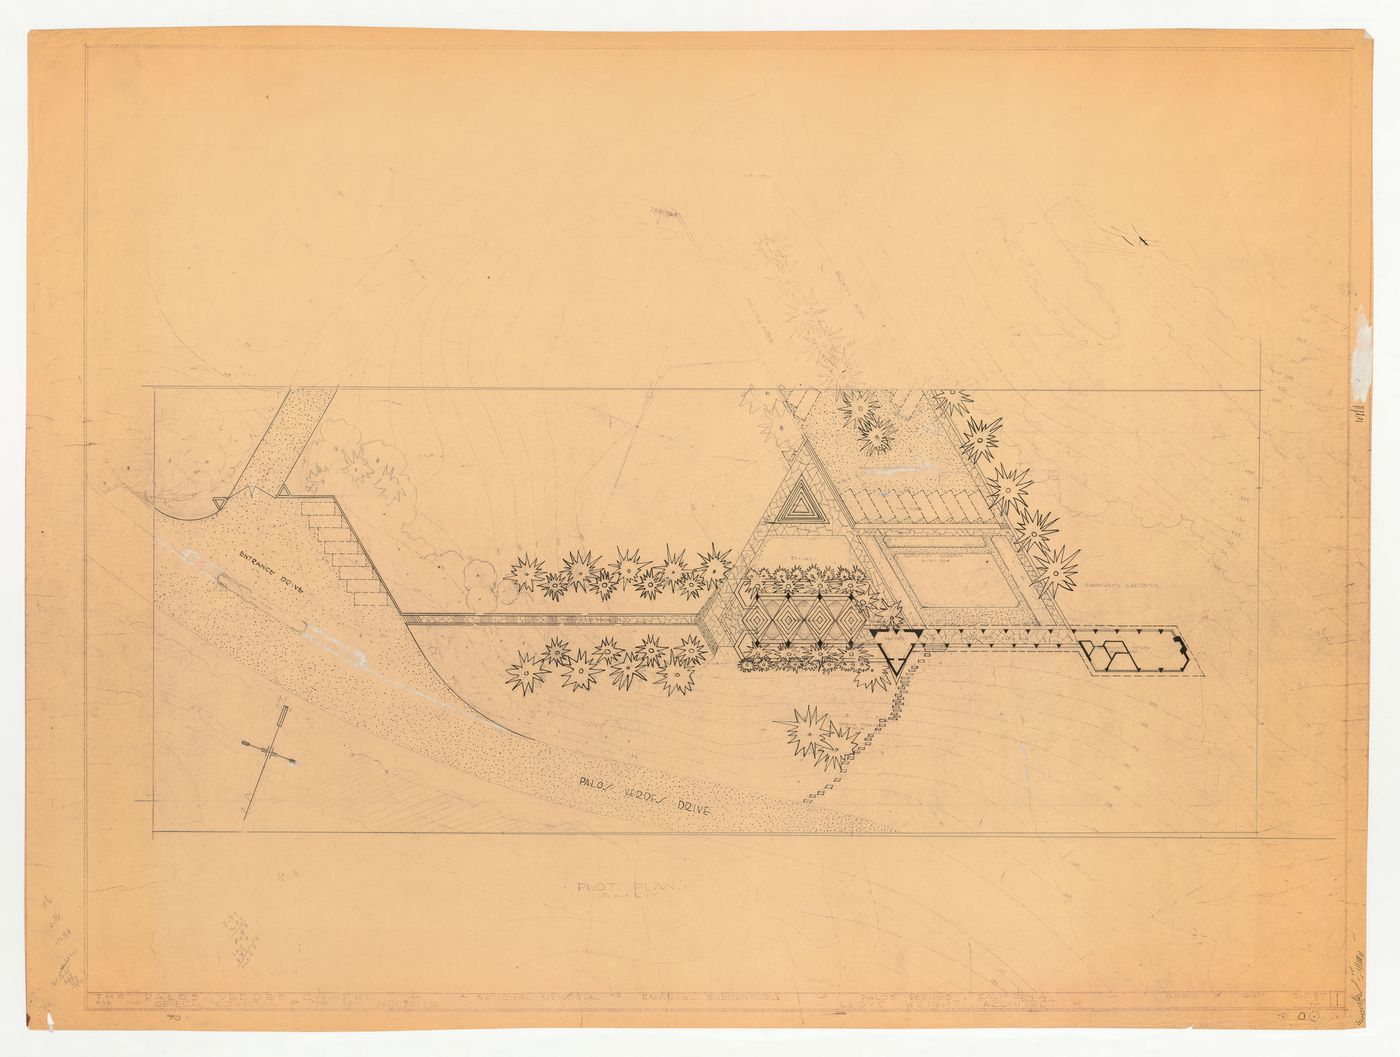 Wayfarers' Chapel, Palos Verdes, California: Preparatory drawing for a site plan